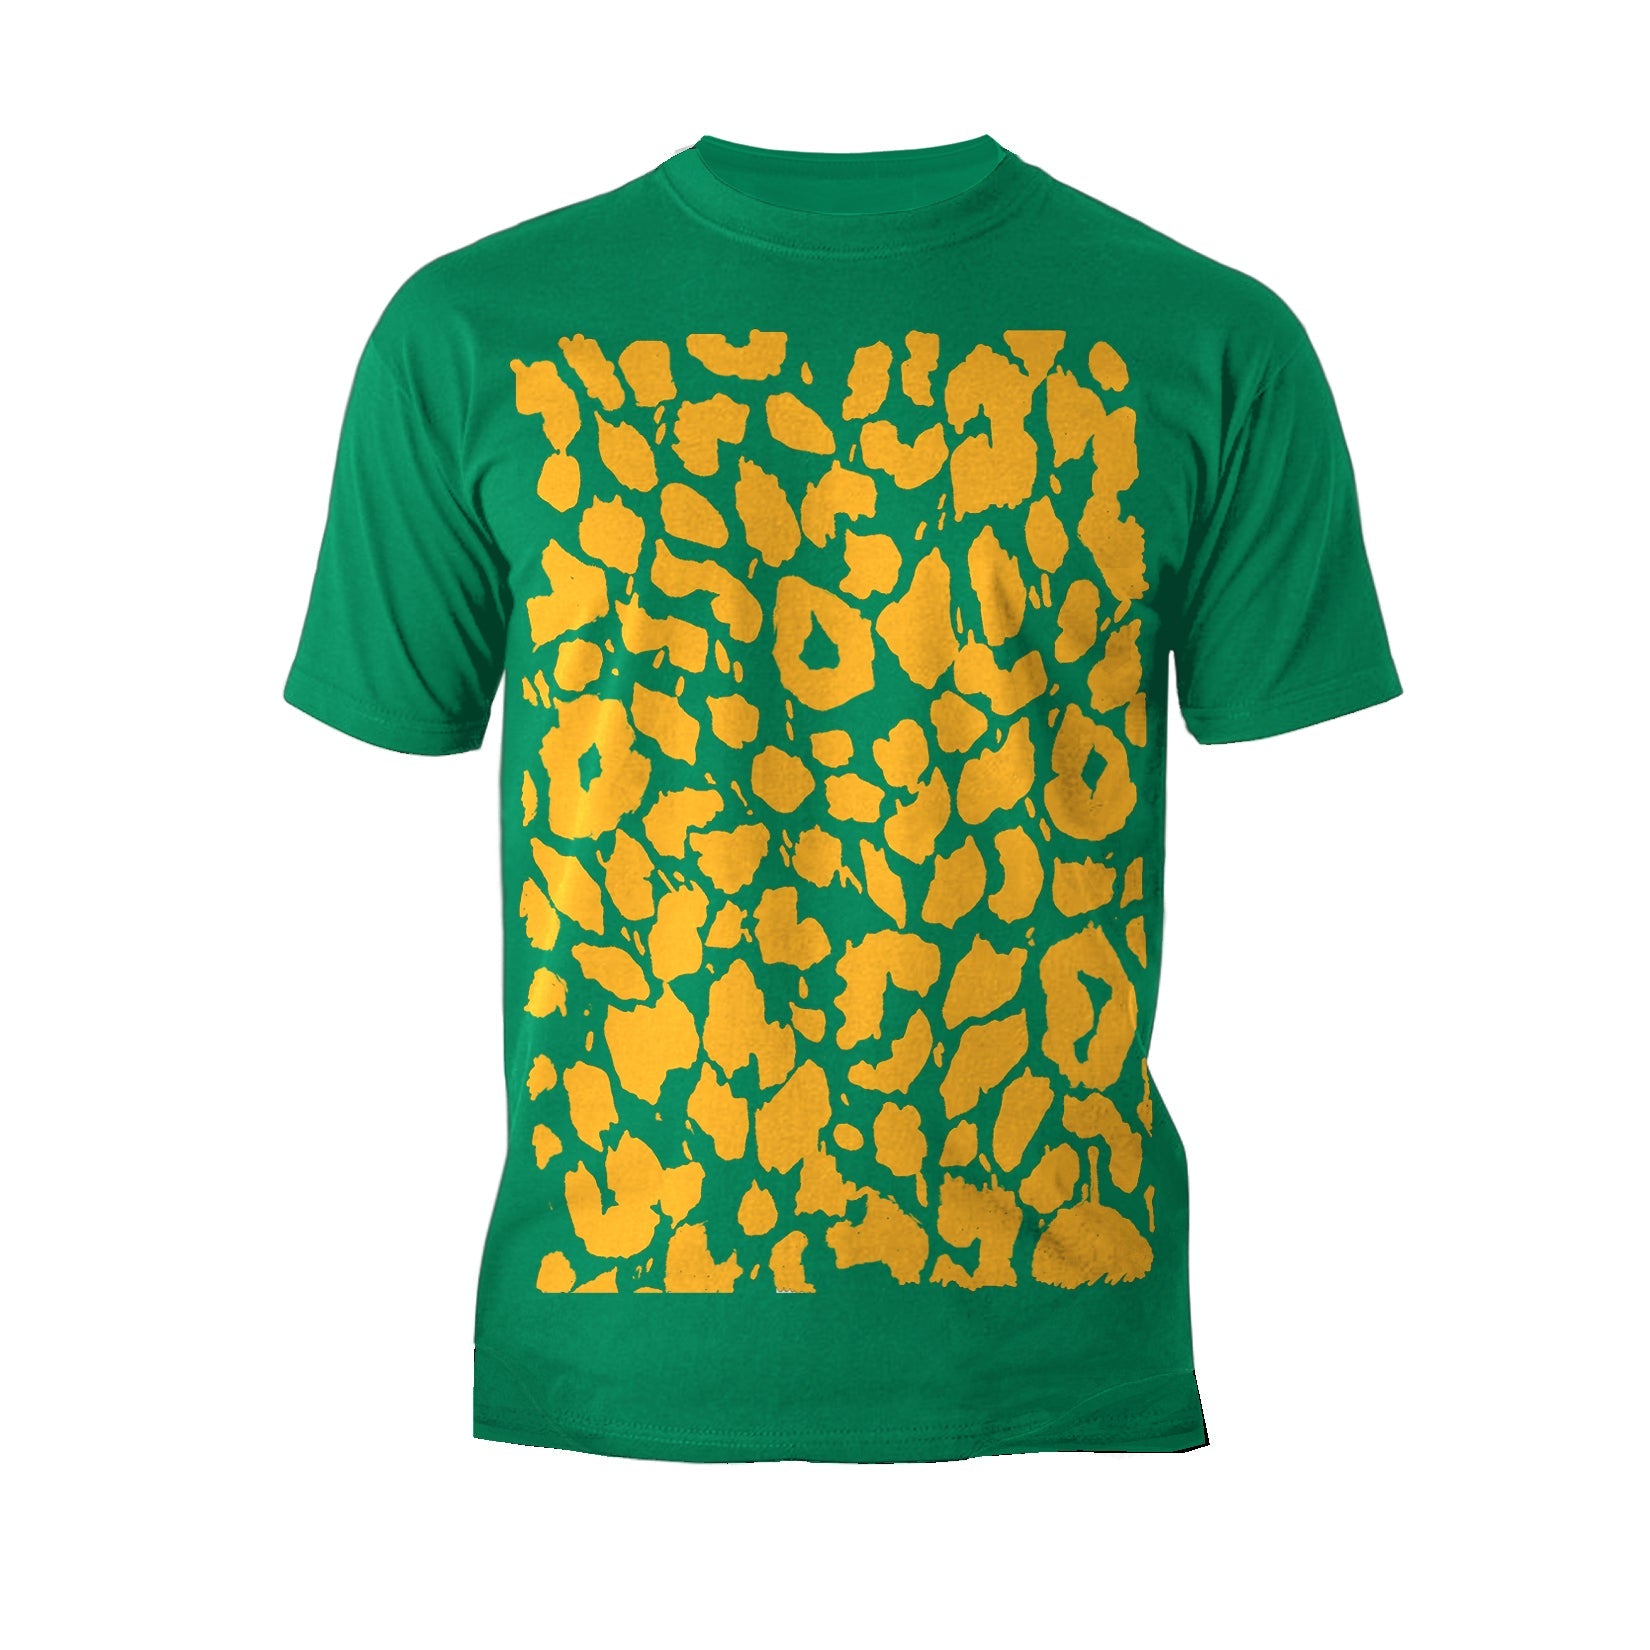 US Brand X Old's Kool Leopard Print Official Men's T-Shirt ()